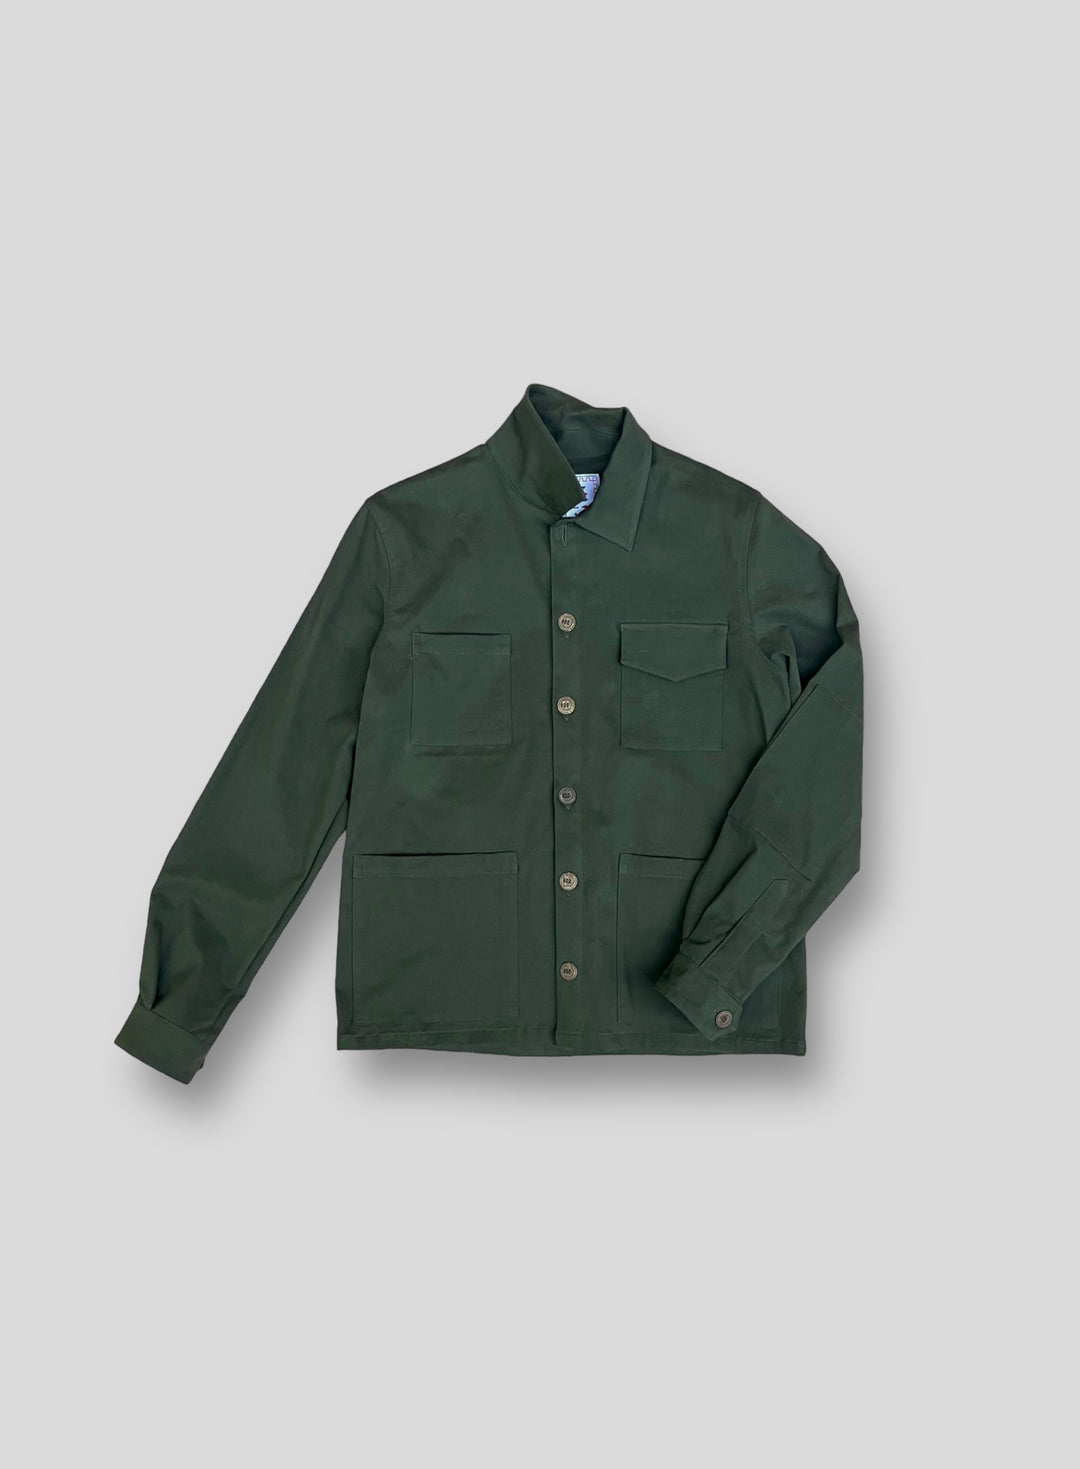 Green Four Pocket Shirt Jacket